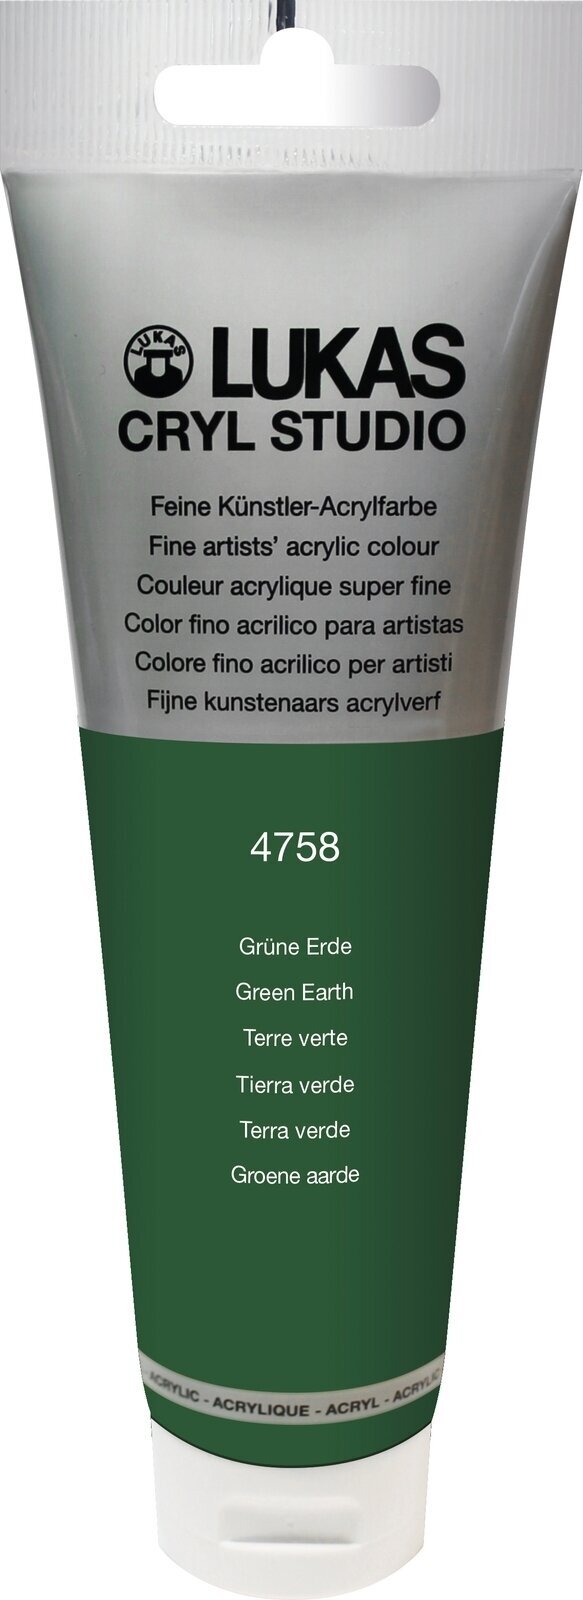 Akrylová farba Lukas Cryl Studio Acrylic Paint Plastic Tube Akrylová farba Green Earth 125 ml 1 ks